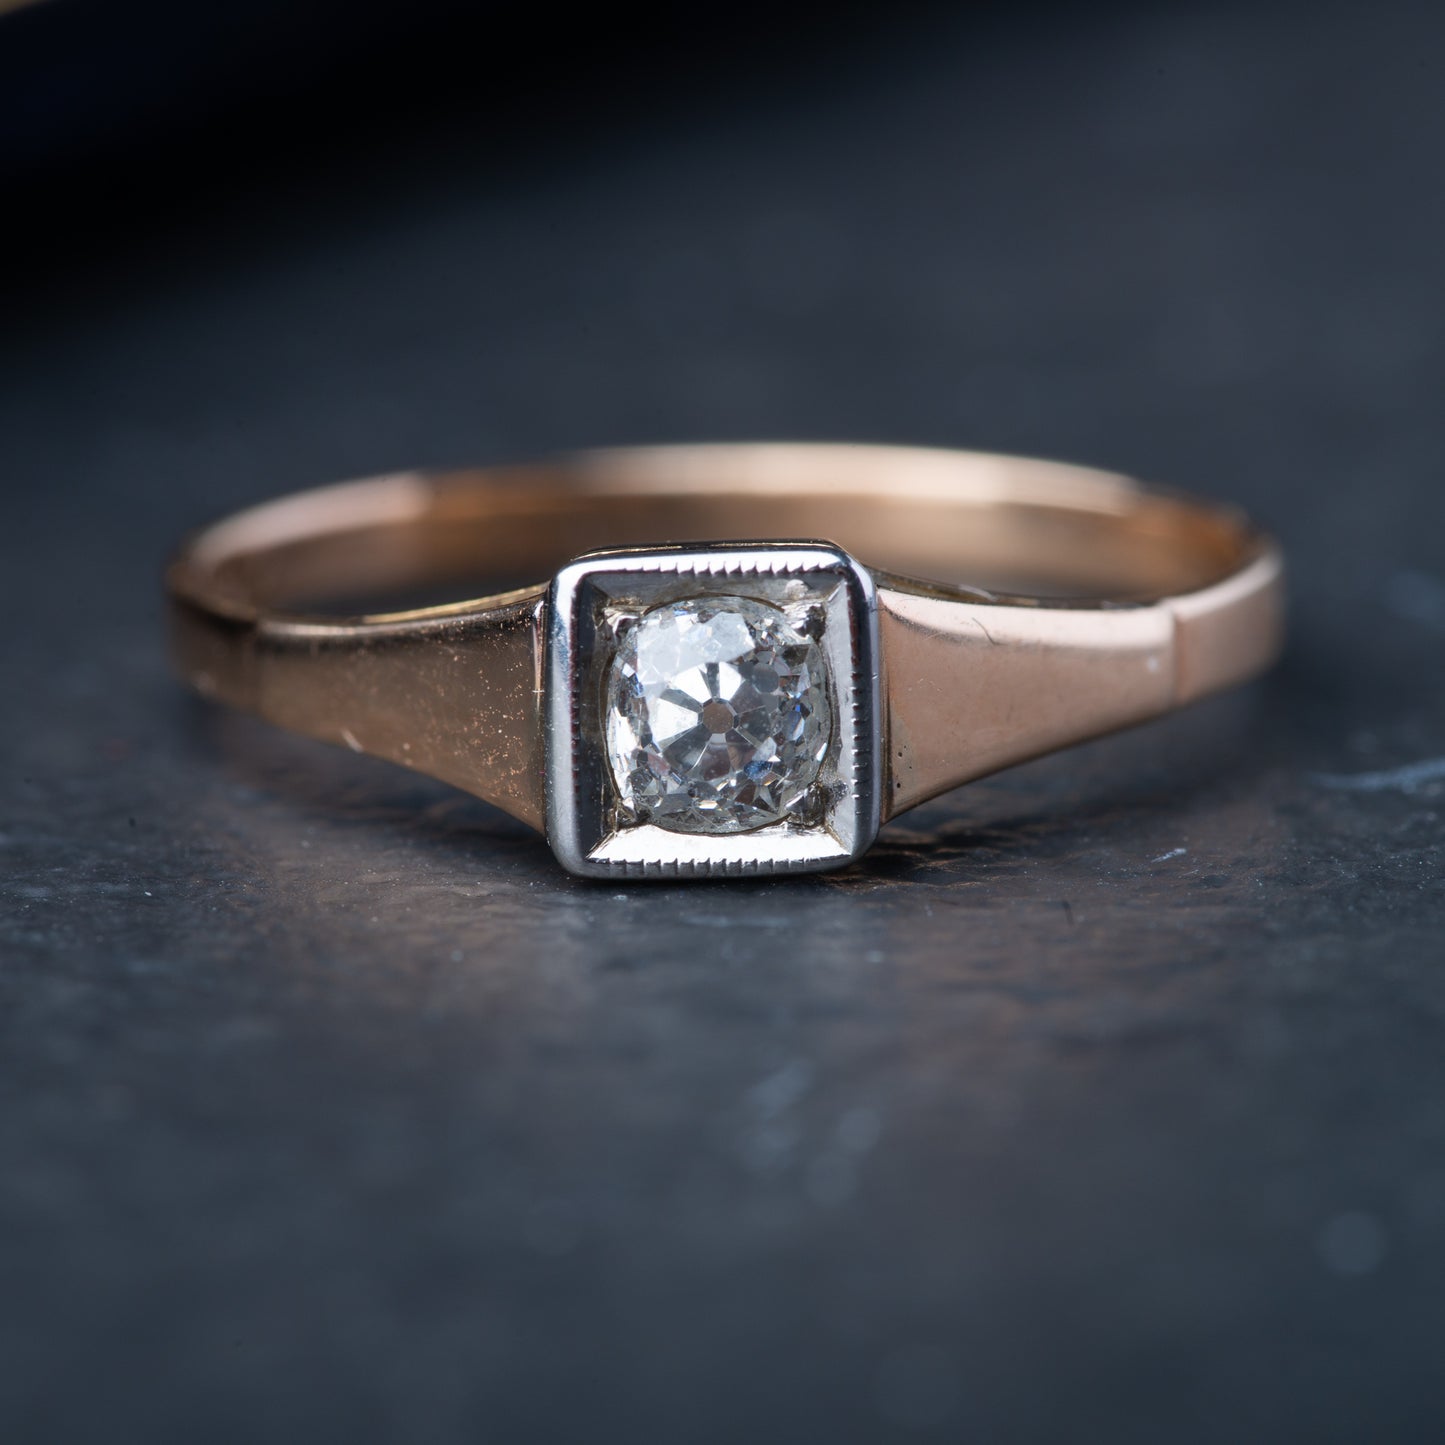 1910's Antique Diamond Ring